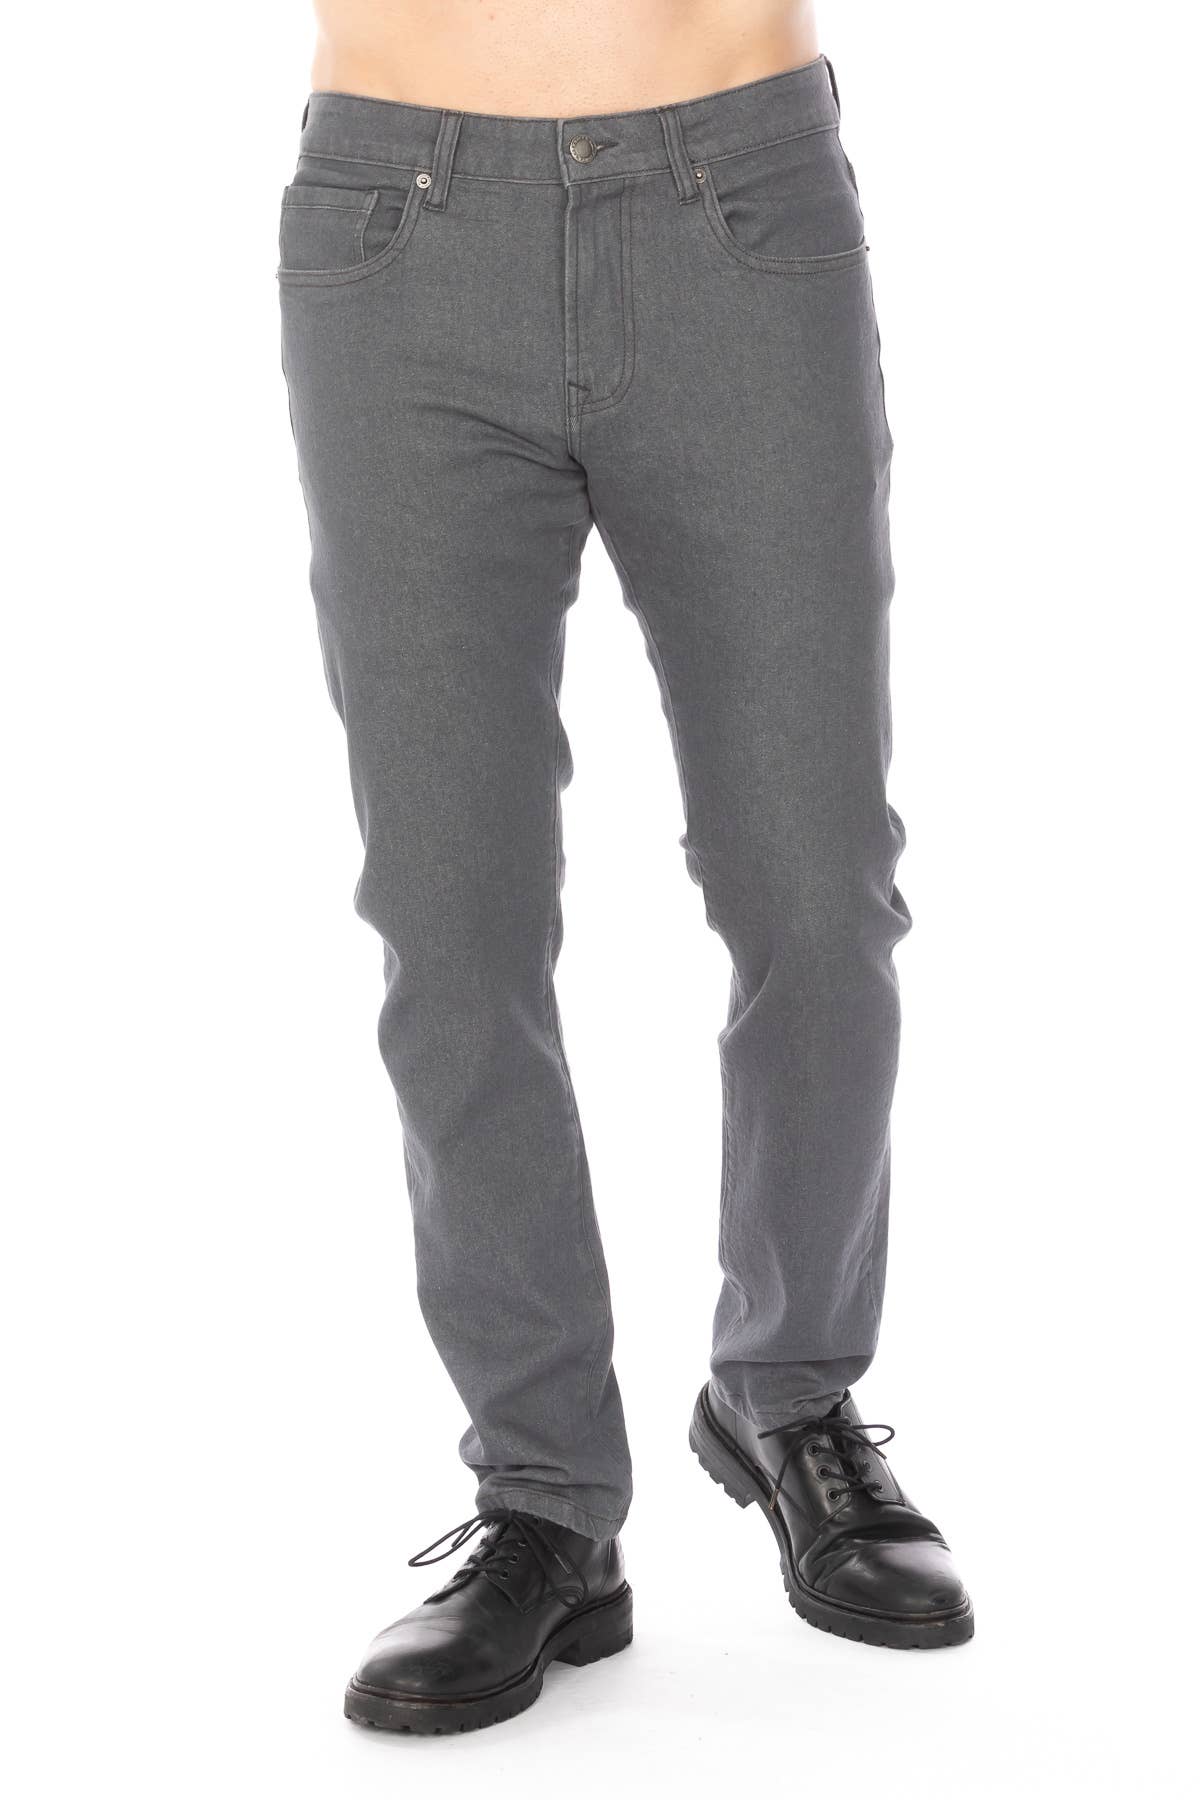 Hawk's Bay - Men's Athletic Denim Stretch Jeans HB-Grey